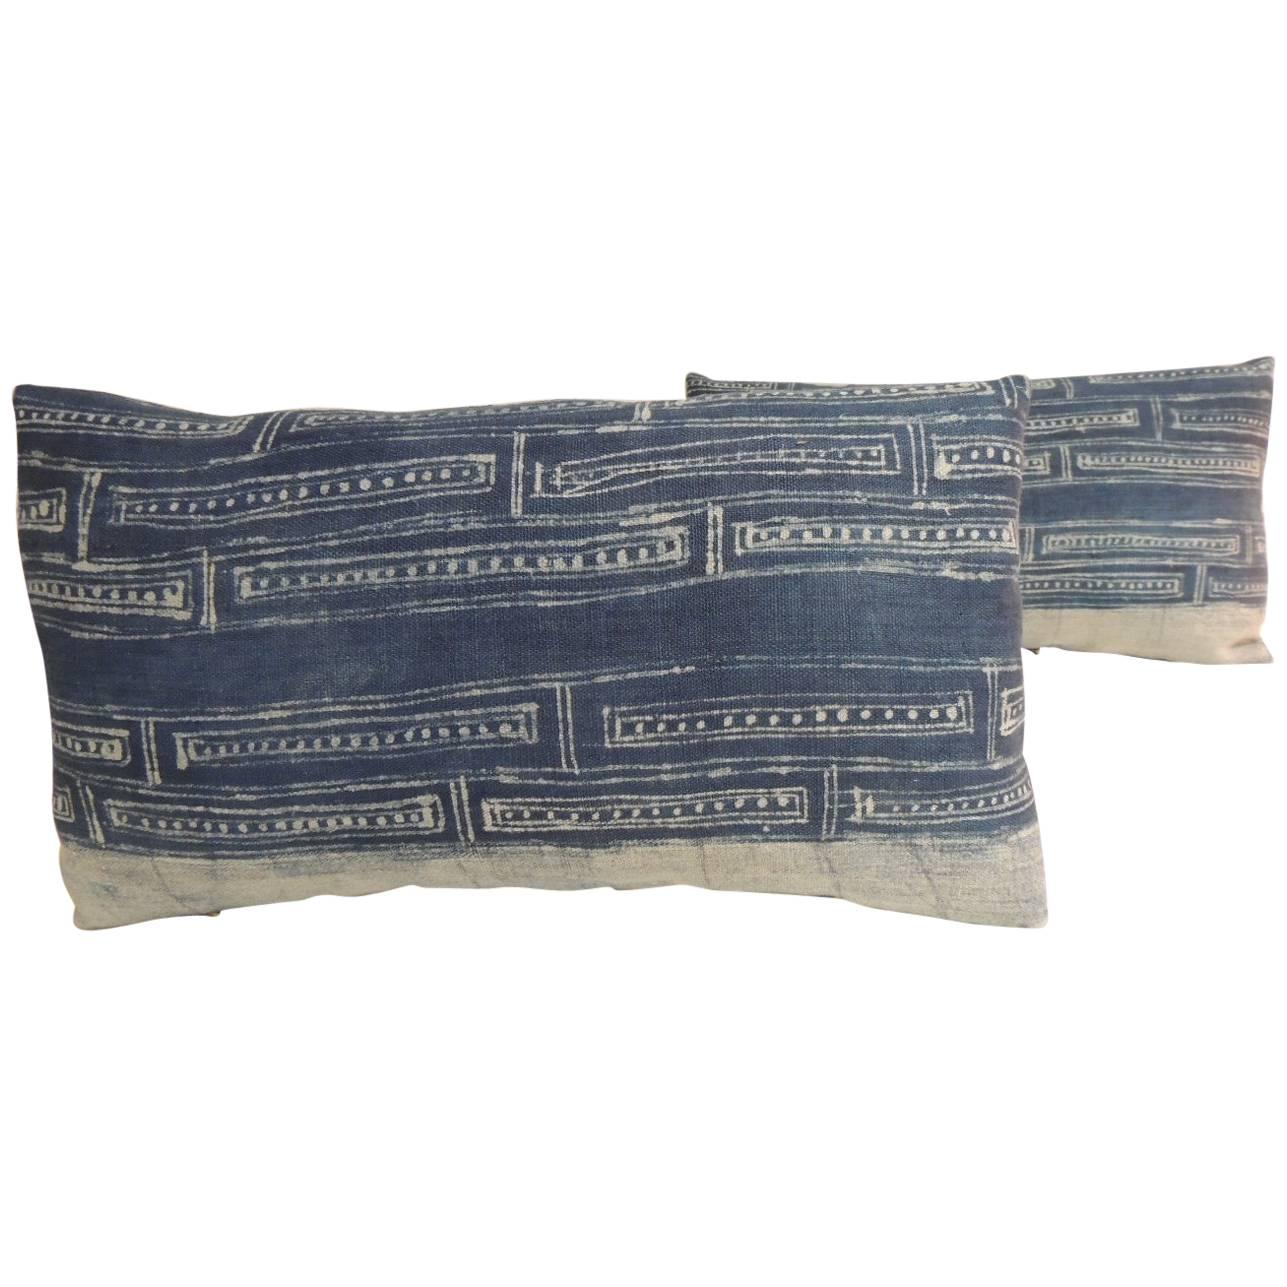 Pair of Vintage Hand Blocked White and Indigo Decorative Lumbar Pillows